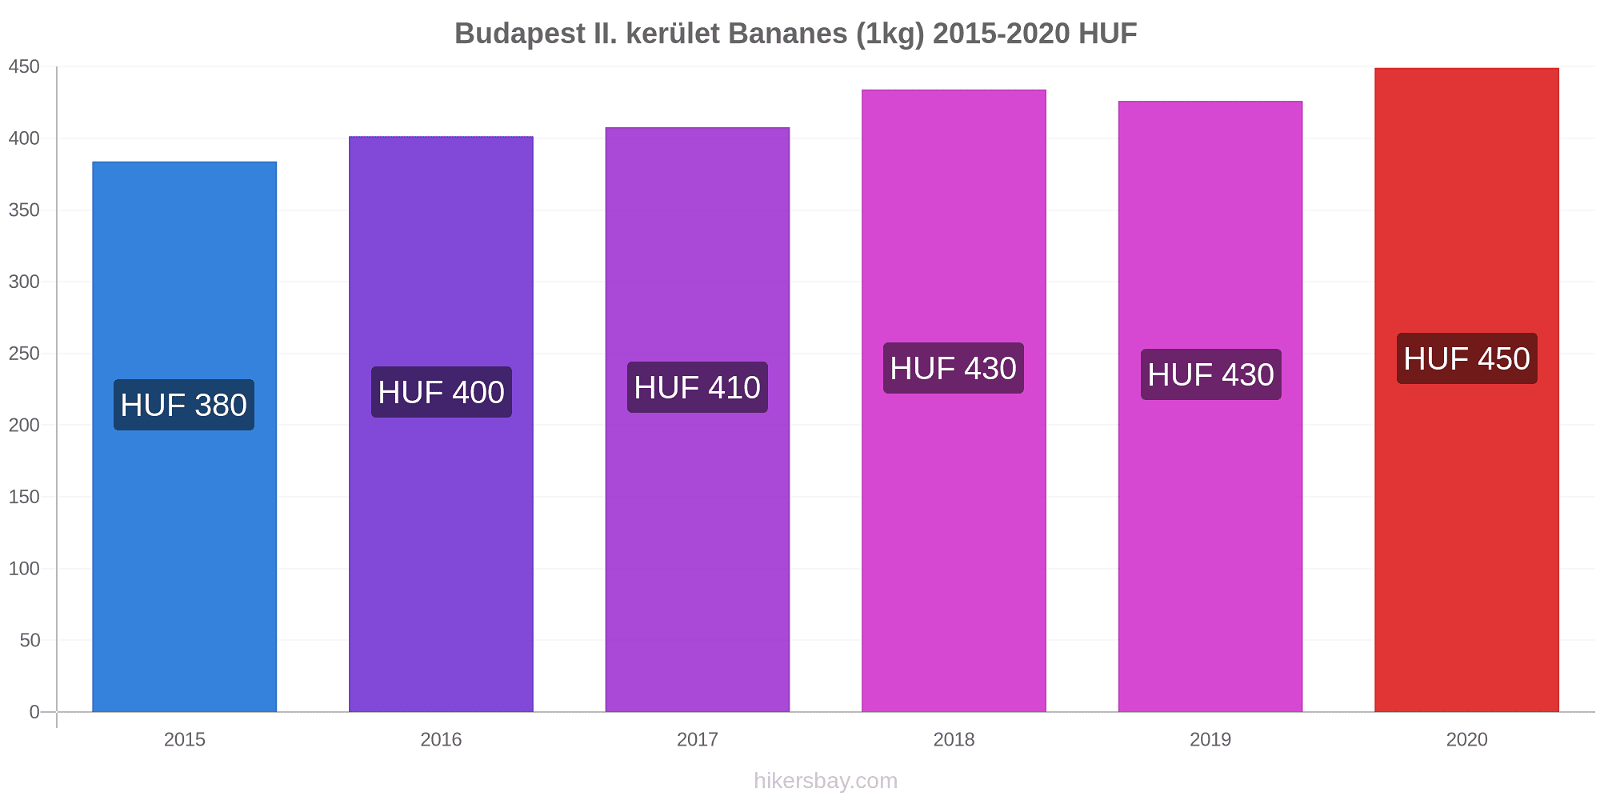 Budapest II. kerület changements de prix Bananes (1kg) hikersbay.com